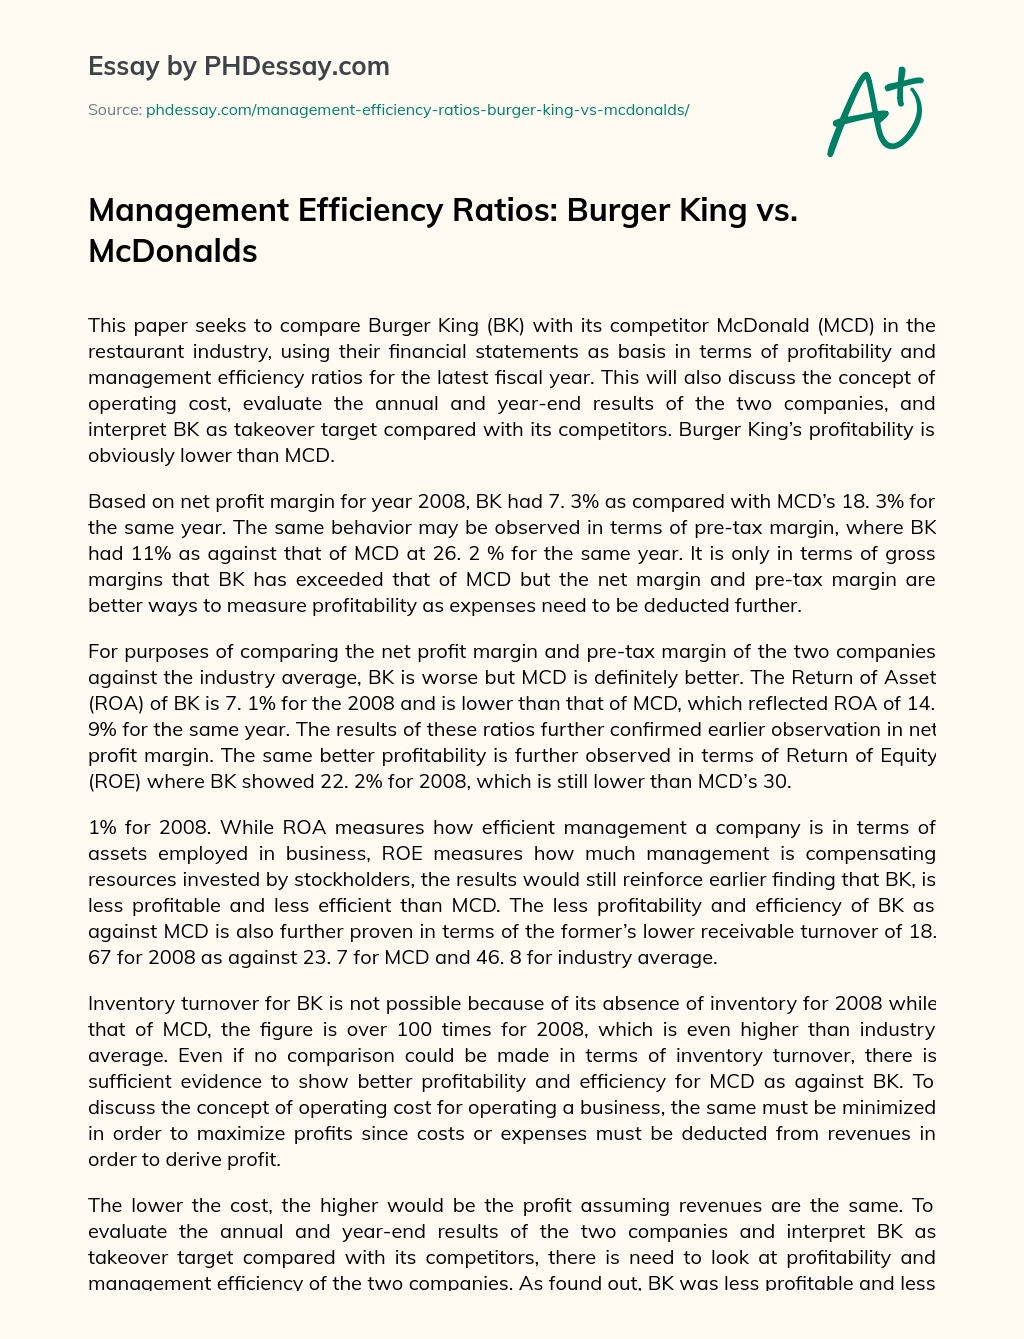 Management Efficiency Ratios: Burger King vs. McDonalds essay